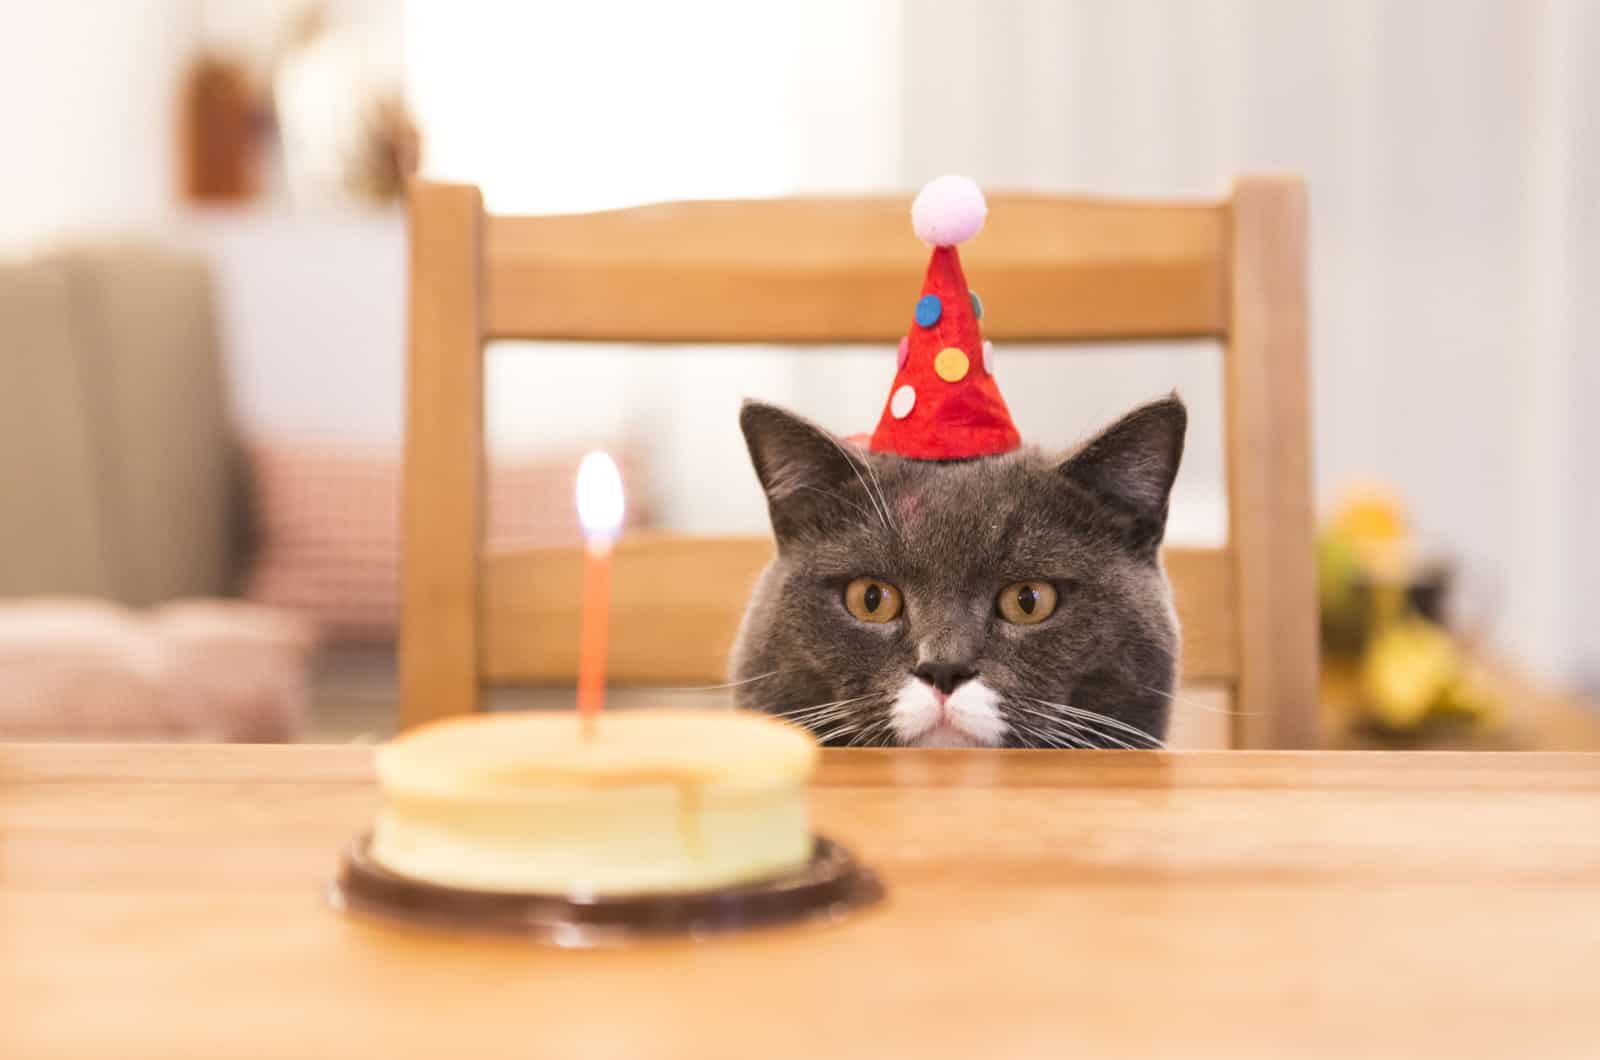 cat waiting to eat cake